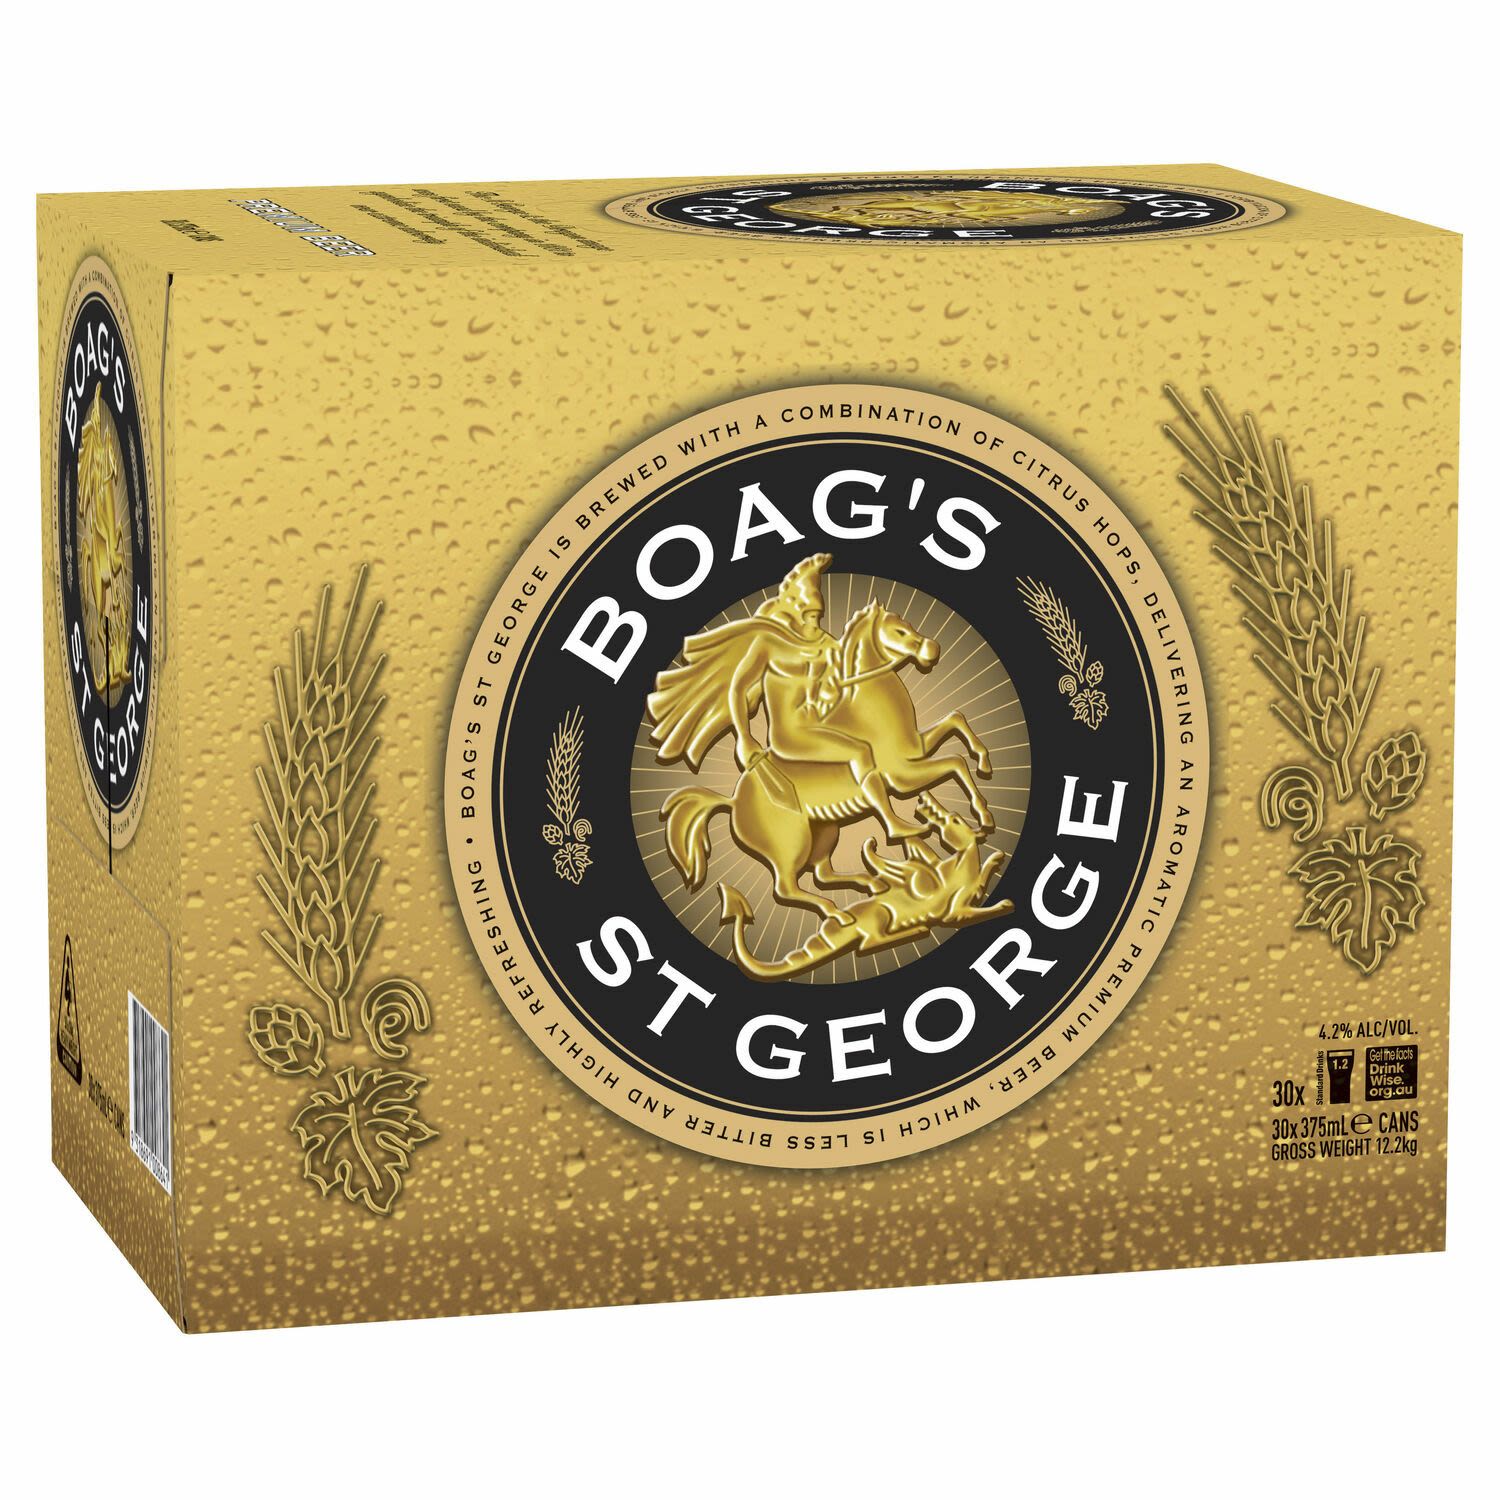 Boag's St George Can 375mL 30 Pack Block